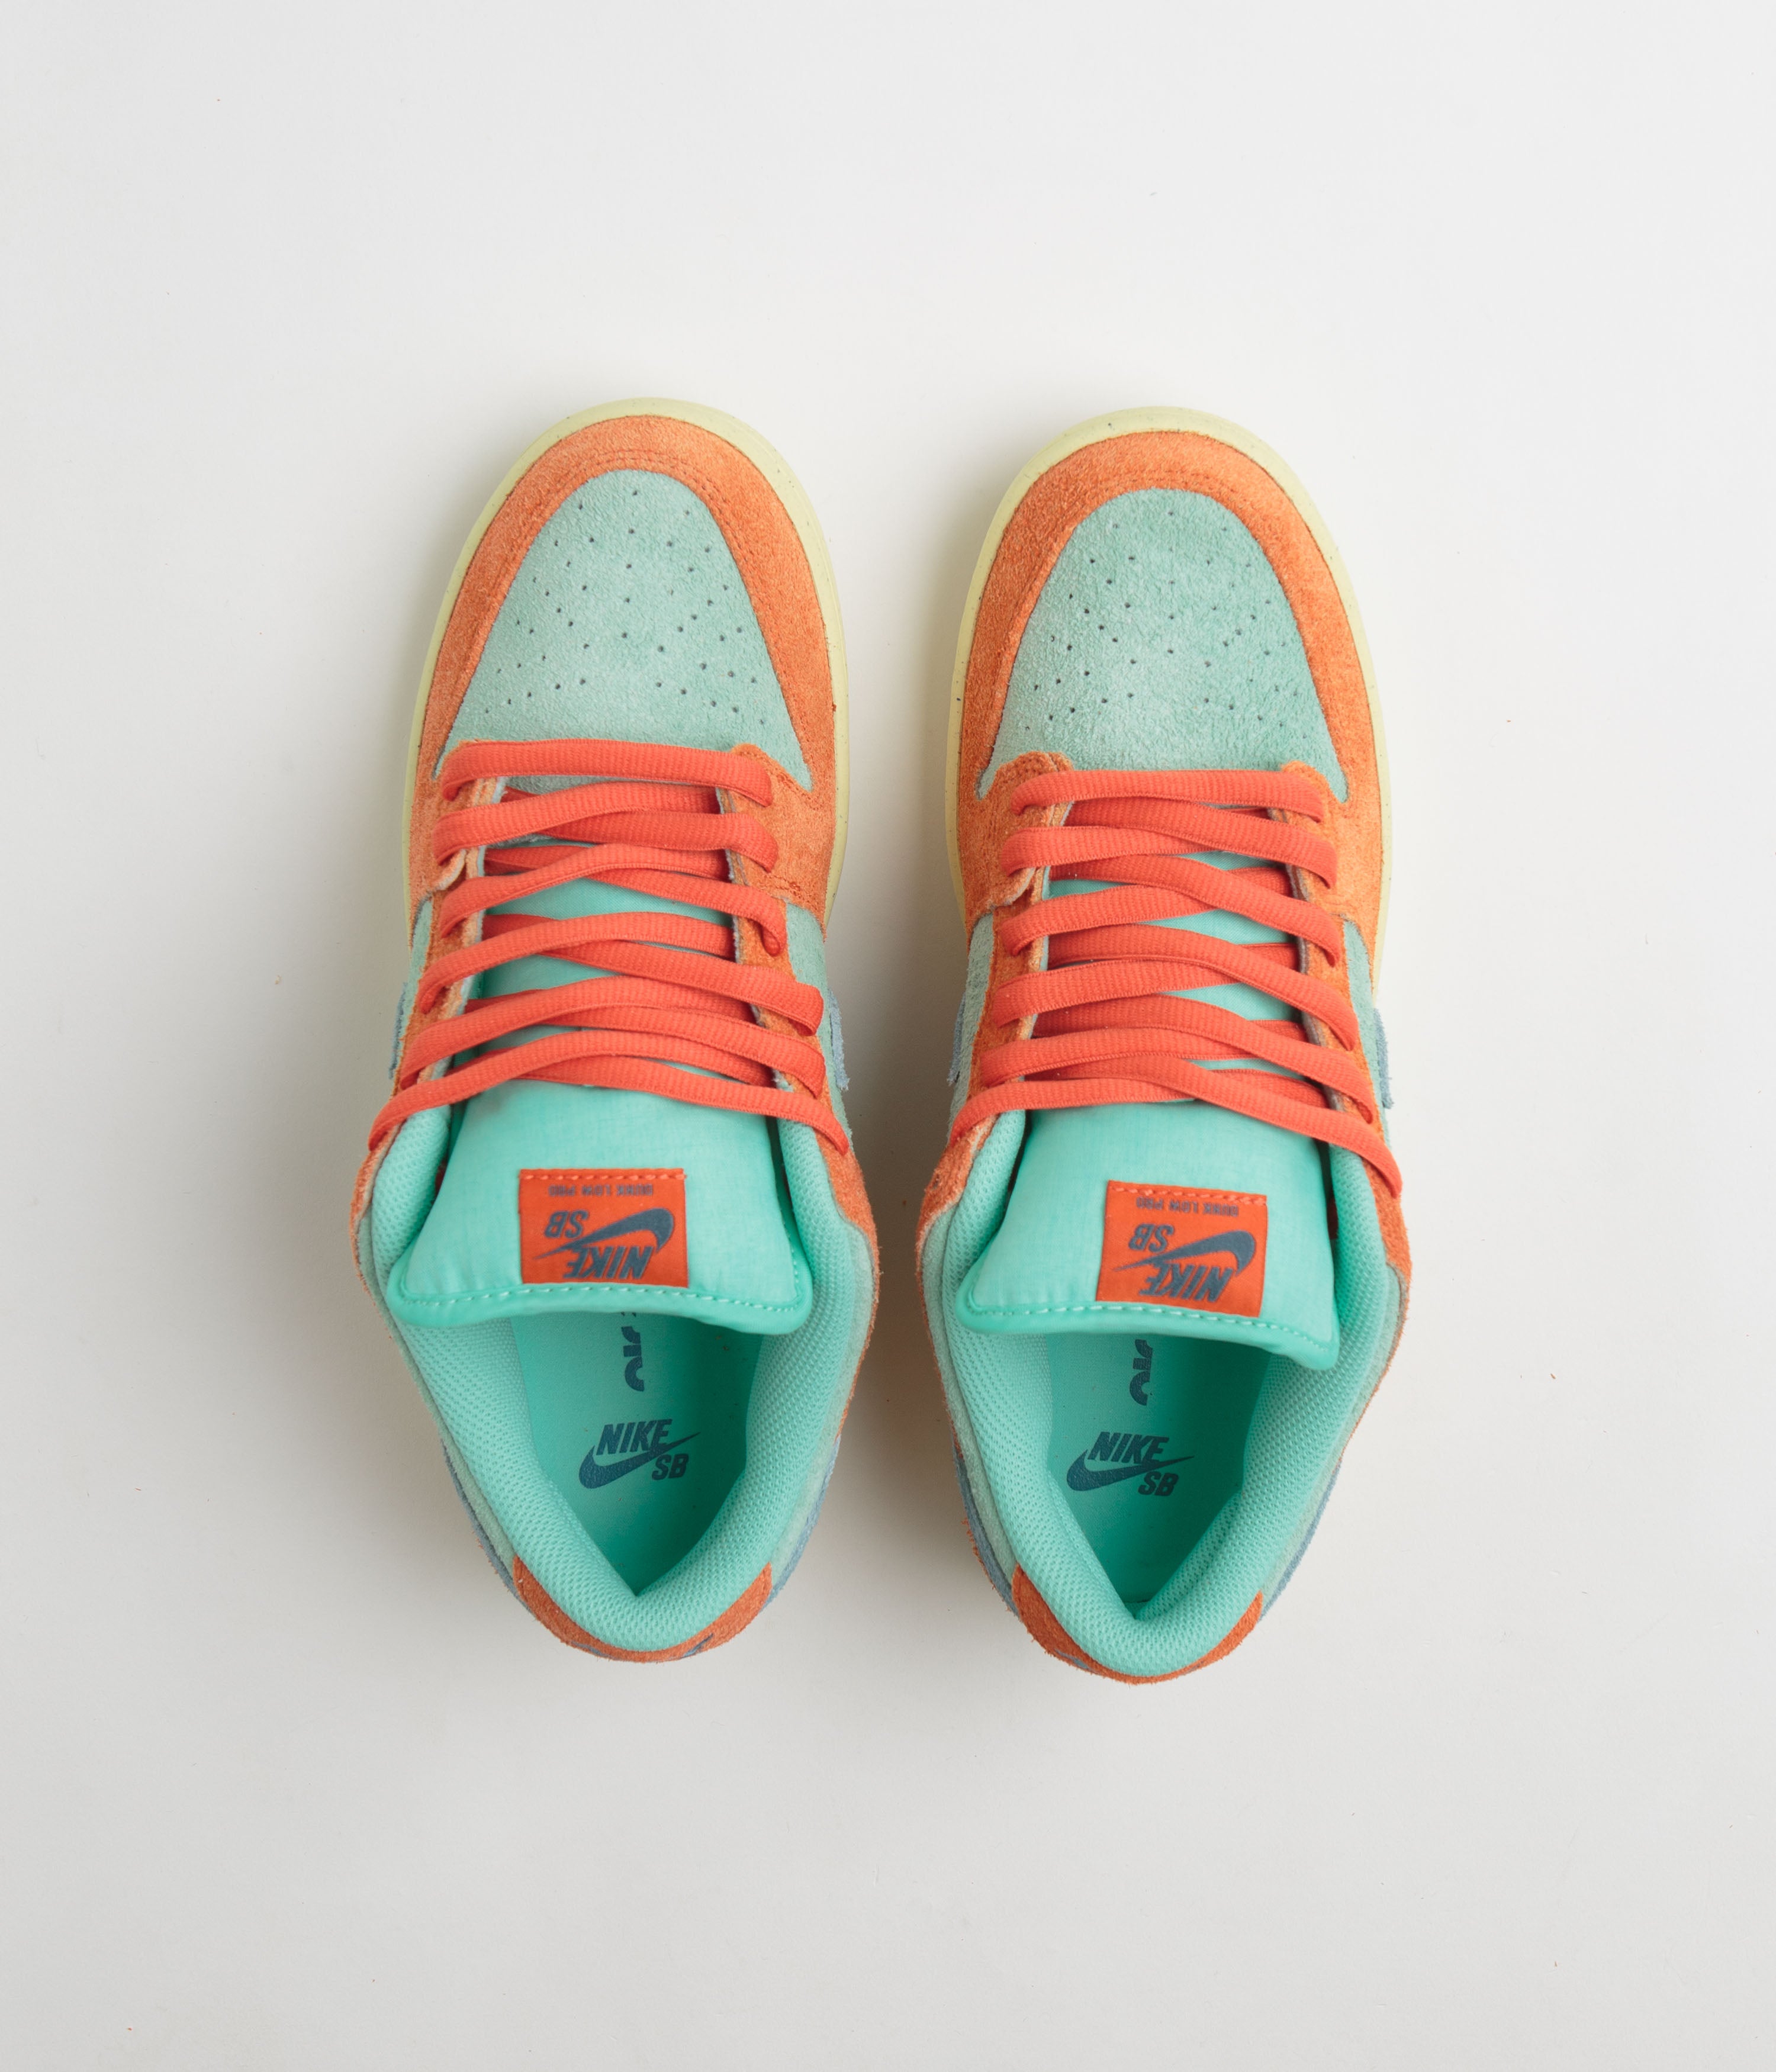 Nike SB Dunk Low Pro Premium Shoes - Orange / Noise Aqua